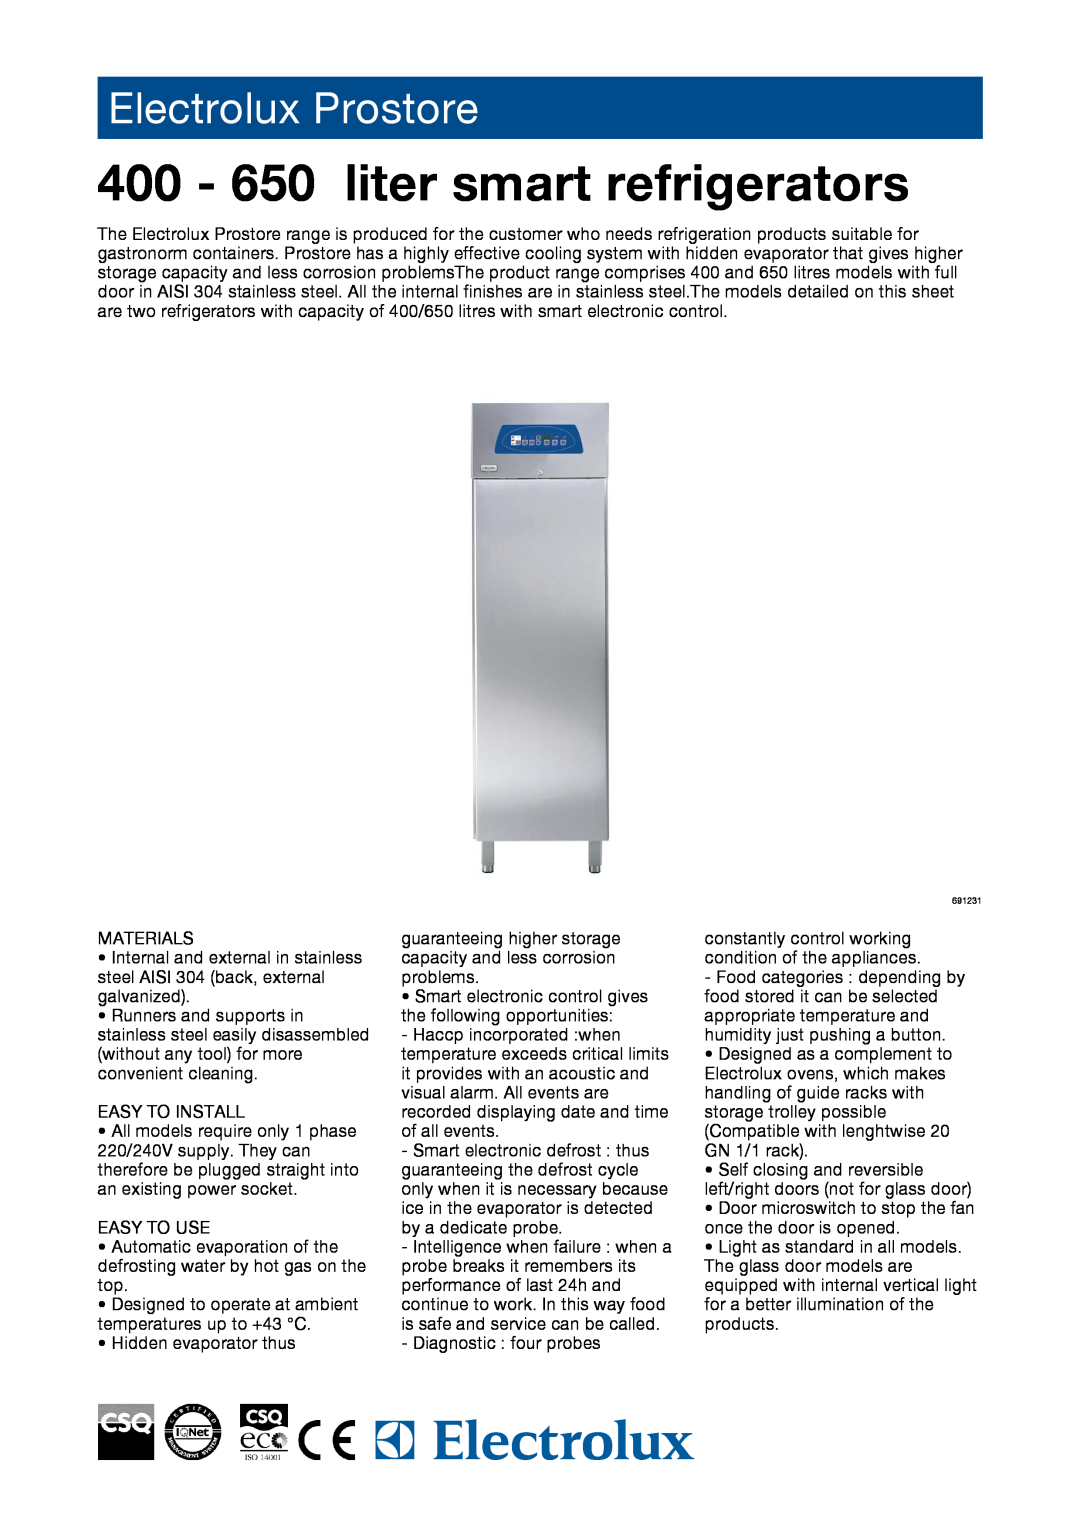 Electrolux PR06RE1F, 691232, PR04RE1F manual 400 - 650 liter smart refrigerators, Electrolux Prostore 